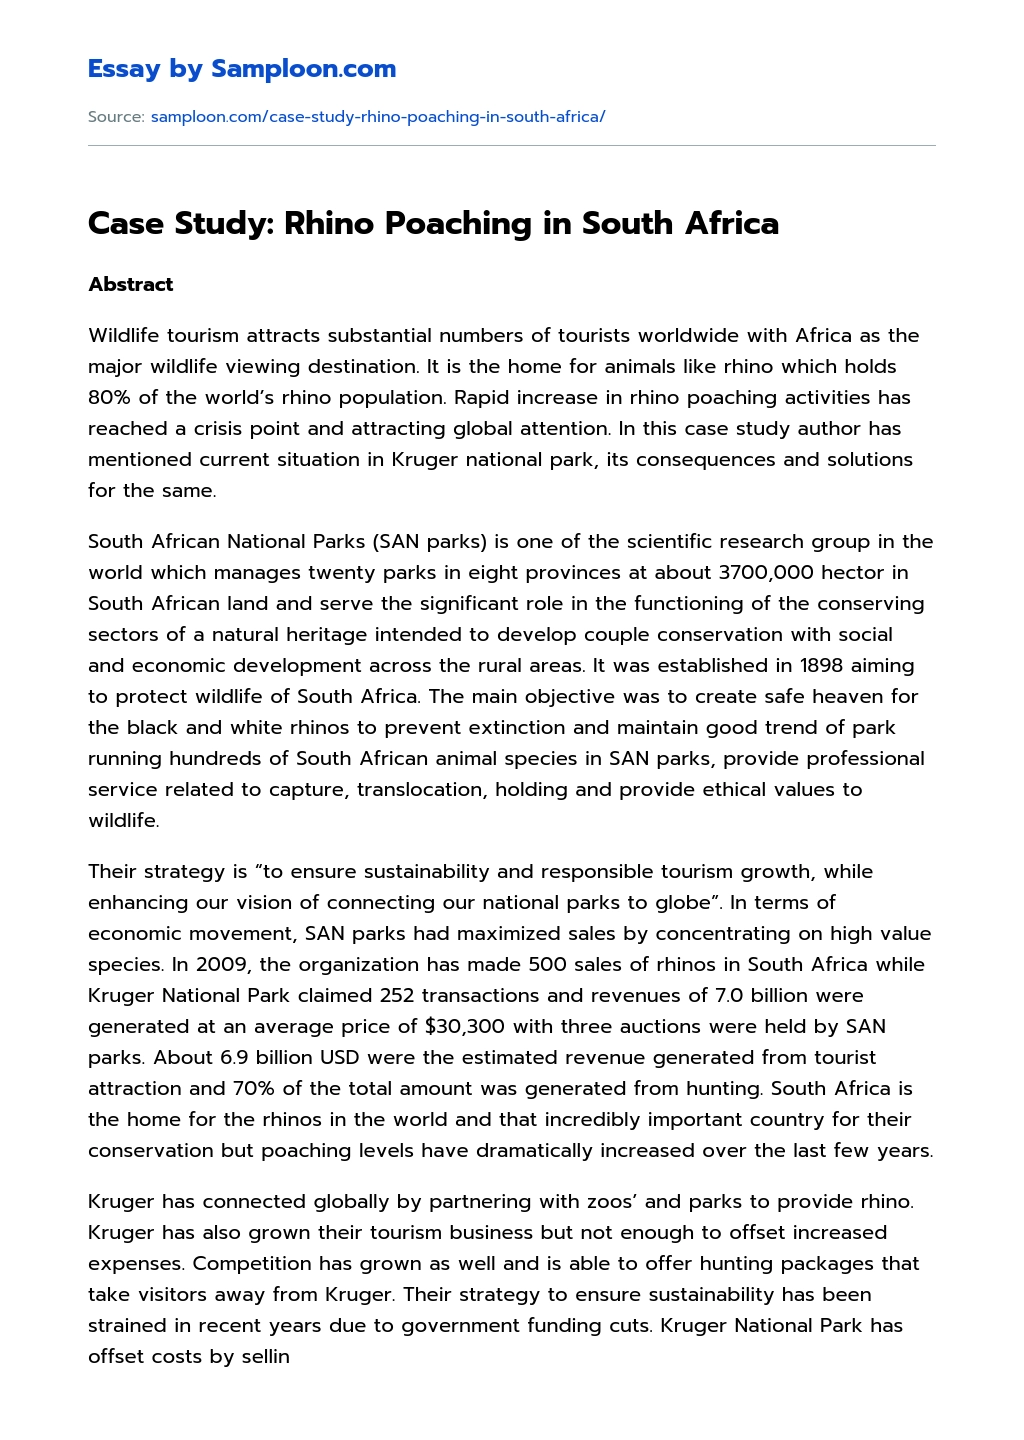 Case Study: Rhino Poaching in South Africa essay